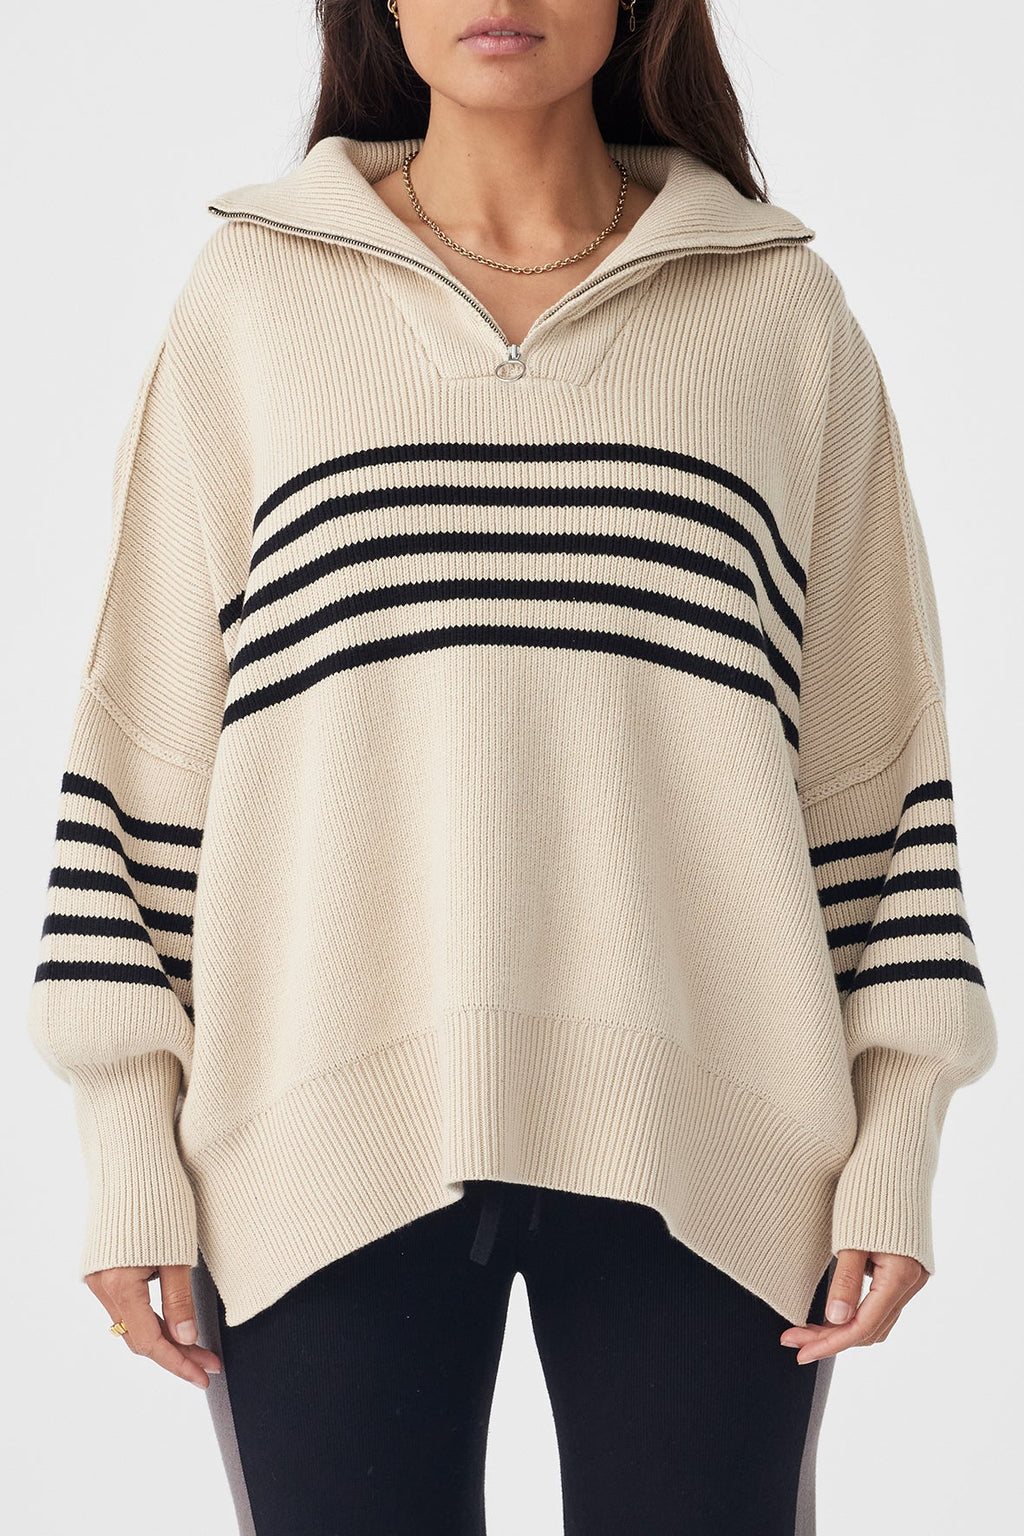 arcaa movement - london zip stripe sweater - sand & black